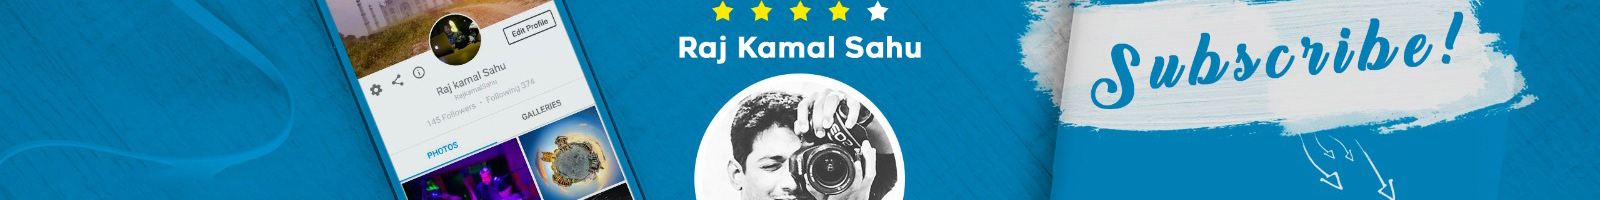 Raj Kamal Sahus profilbanner